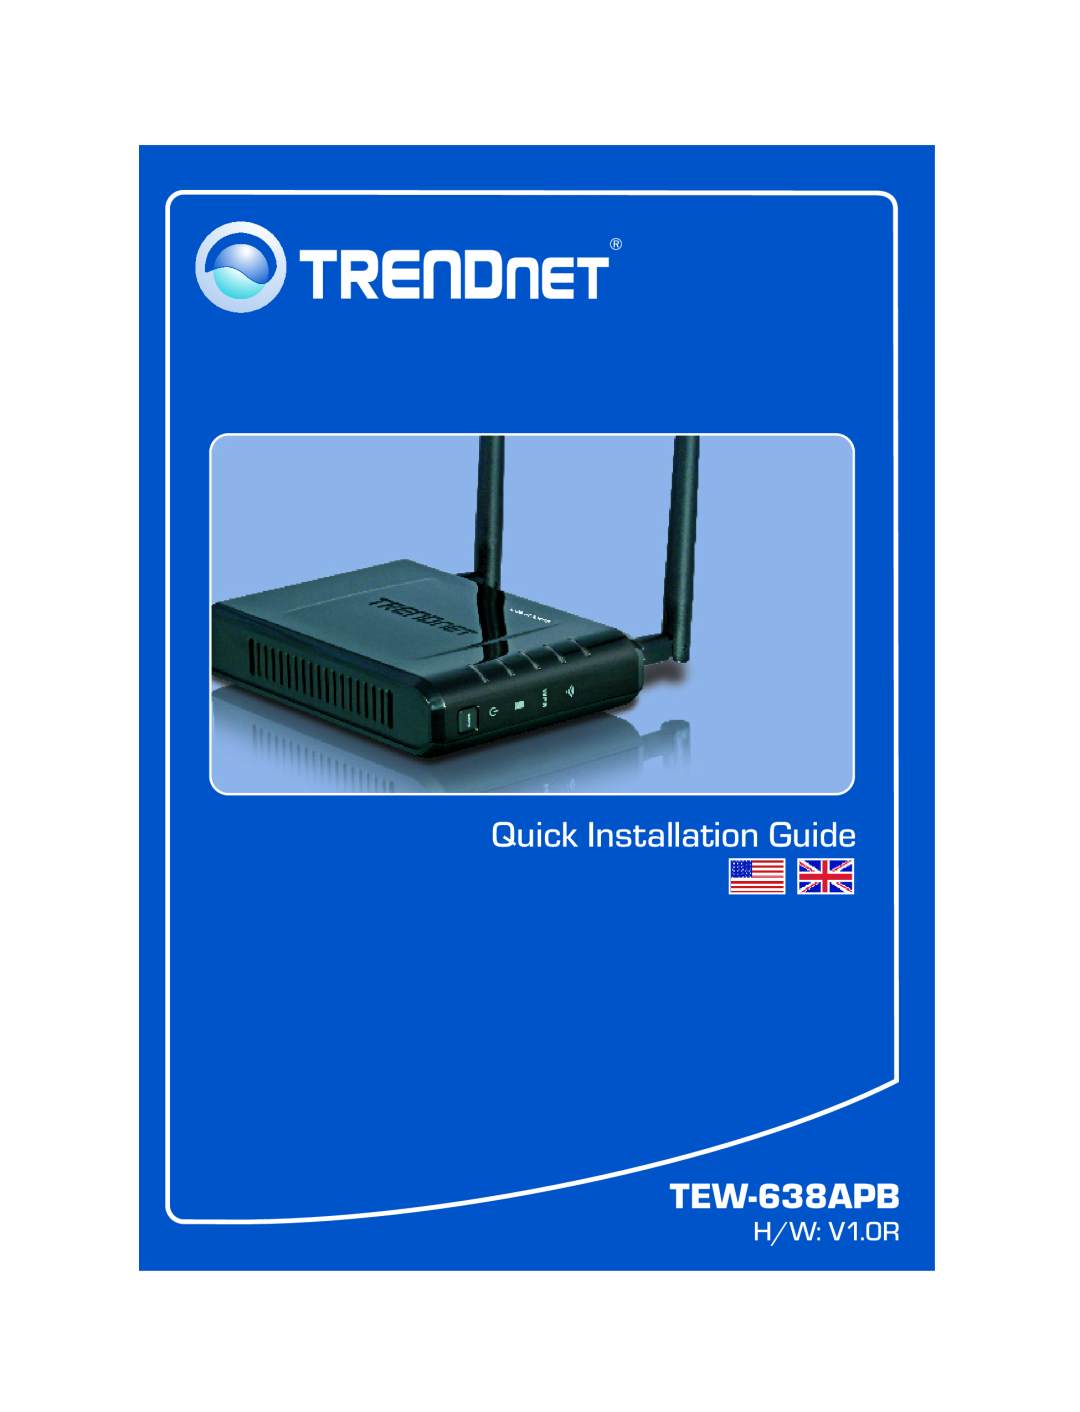 TRENDnet TEW-638APB manual Quick Installation Guide, H/W V1.0R 